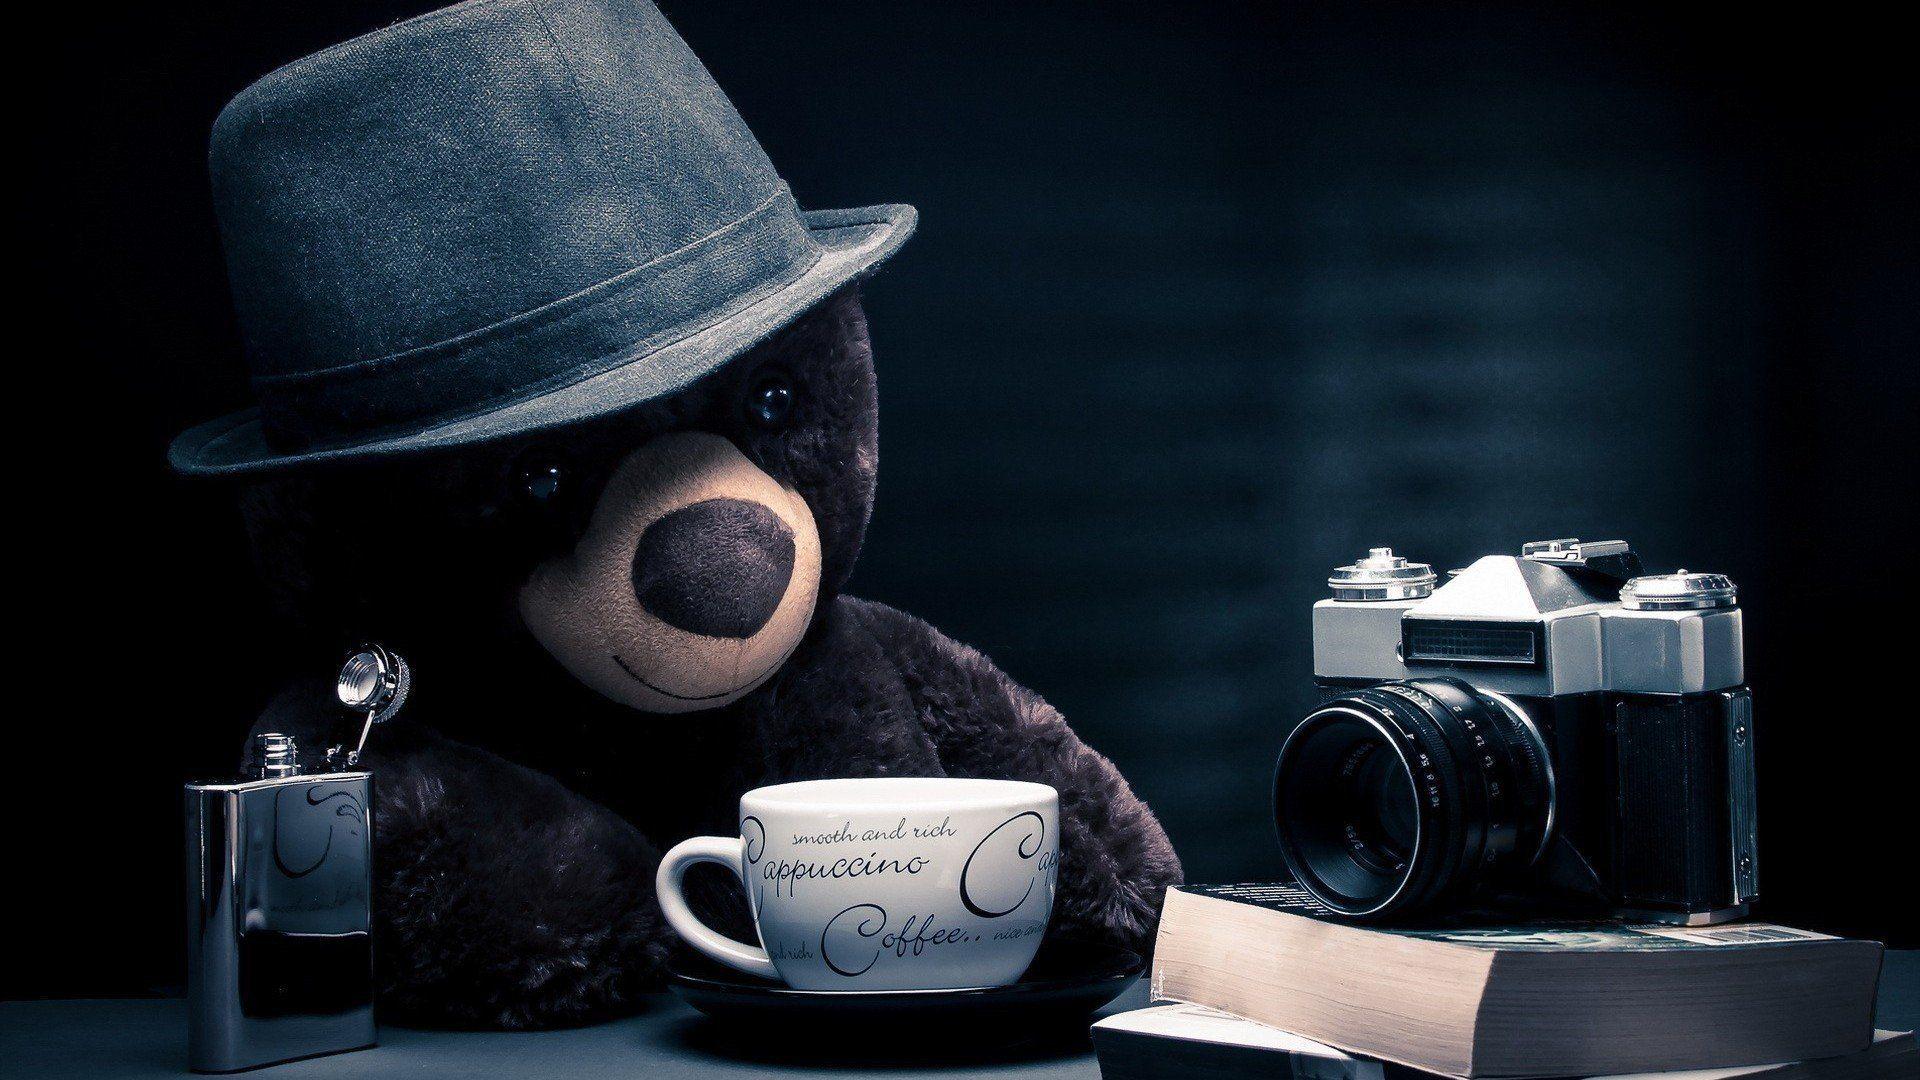 teddy bear books camera hat journalist cappuccino coffee table